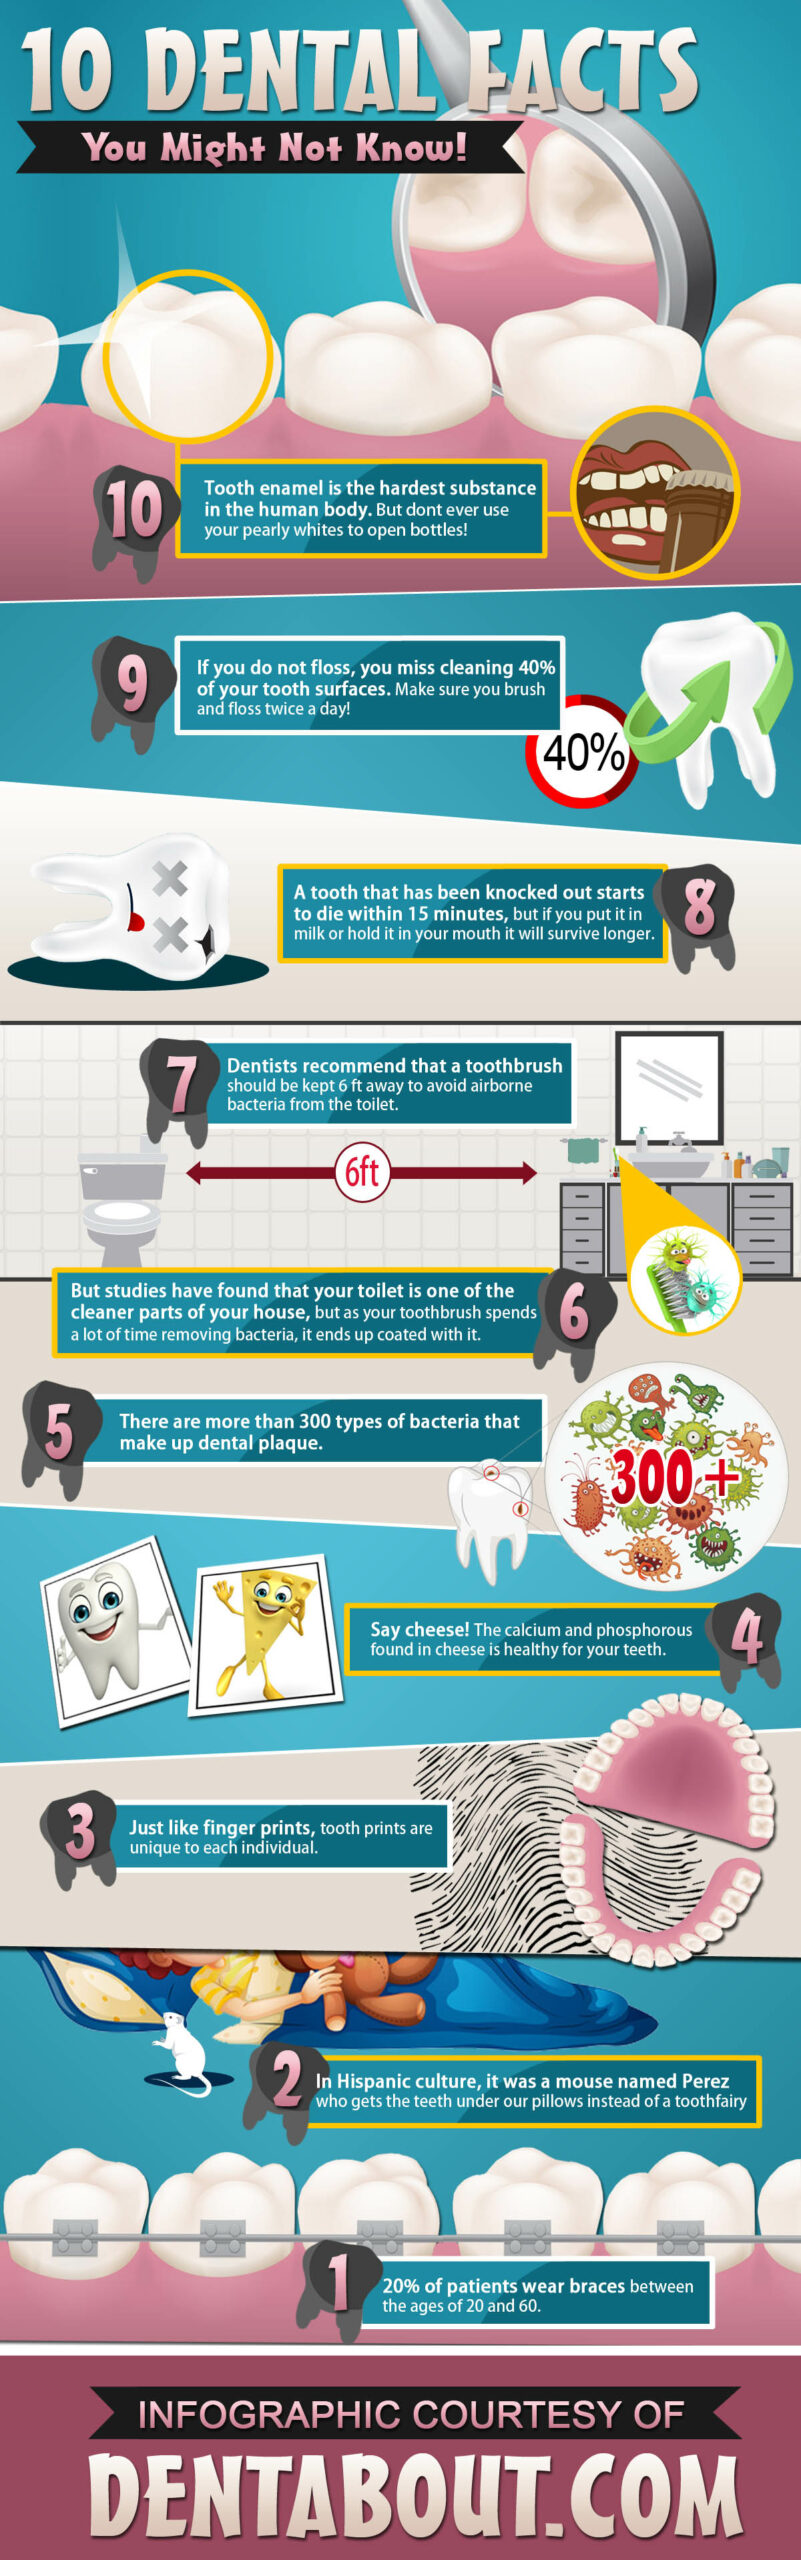 10 Dental Facts